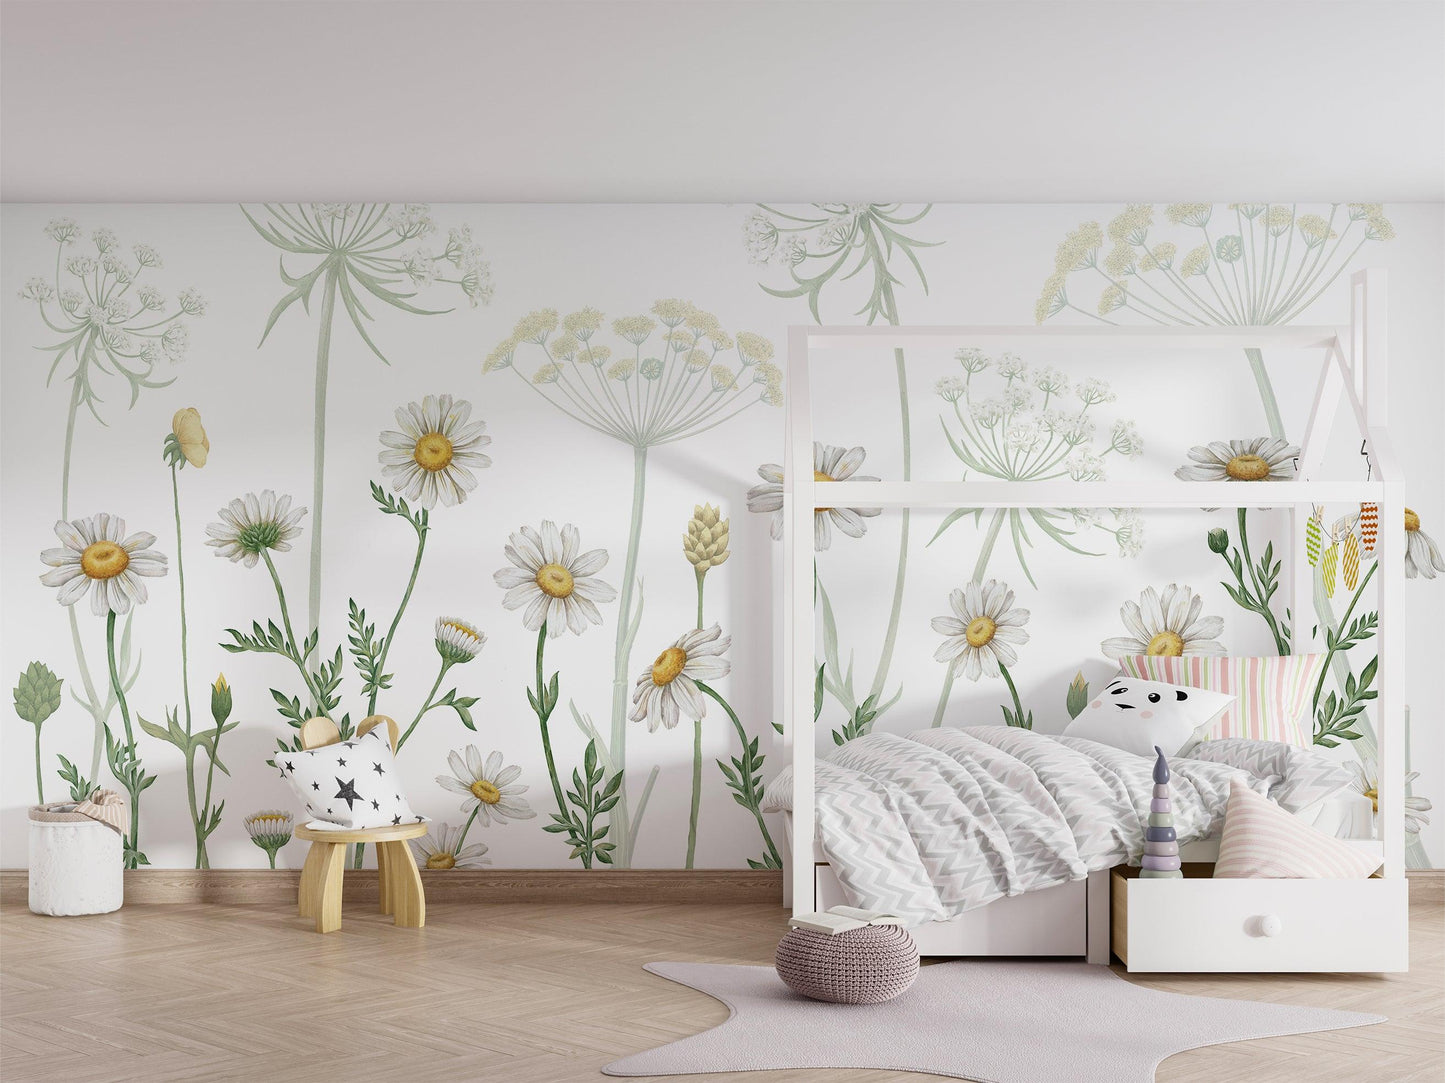 Field of Daisies Wallpaper Mural - MAIA HOMES